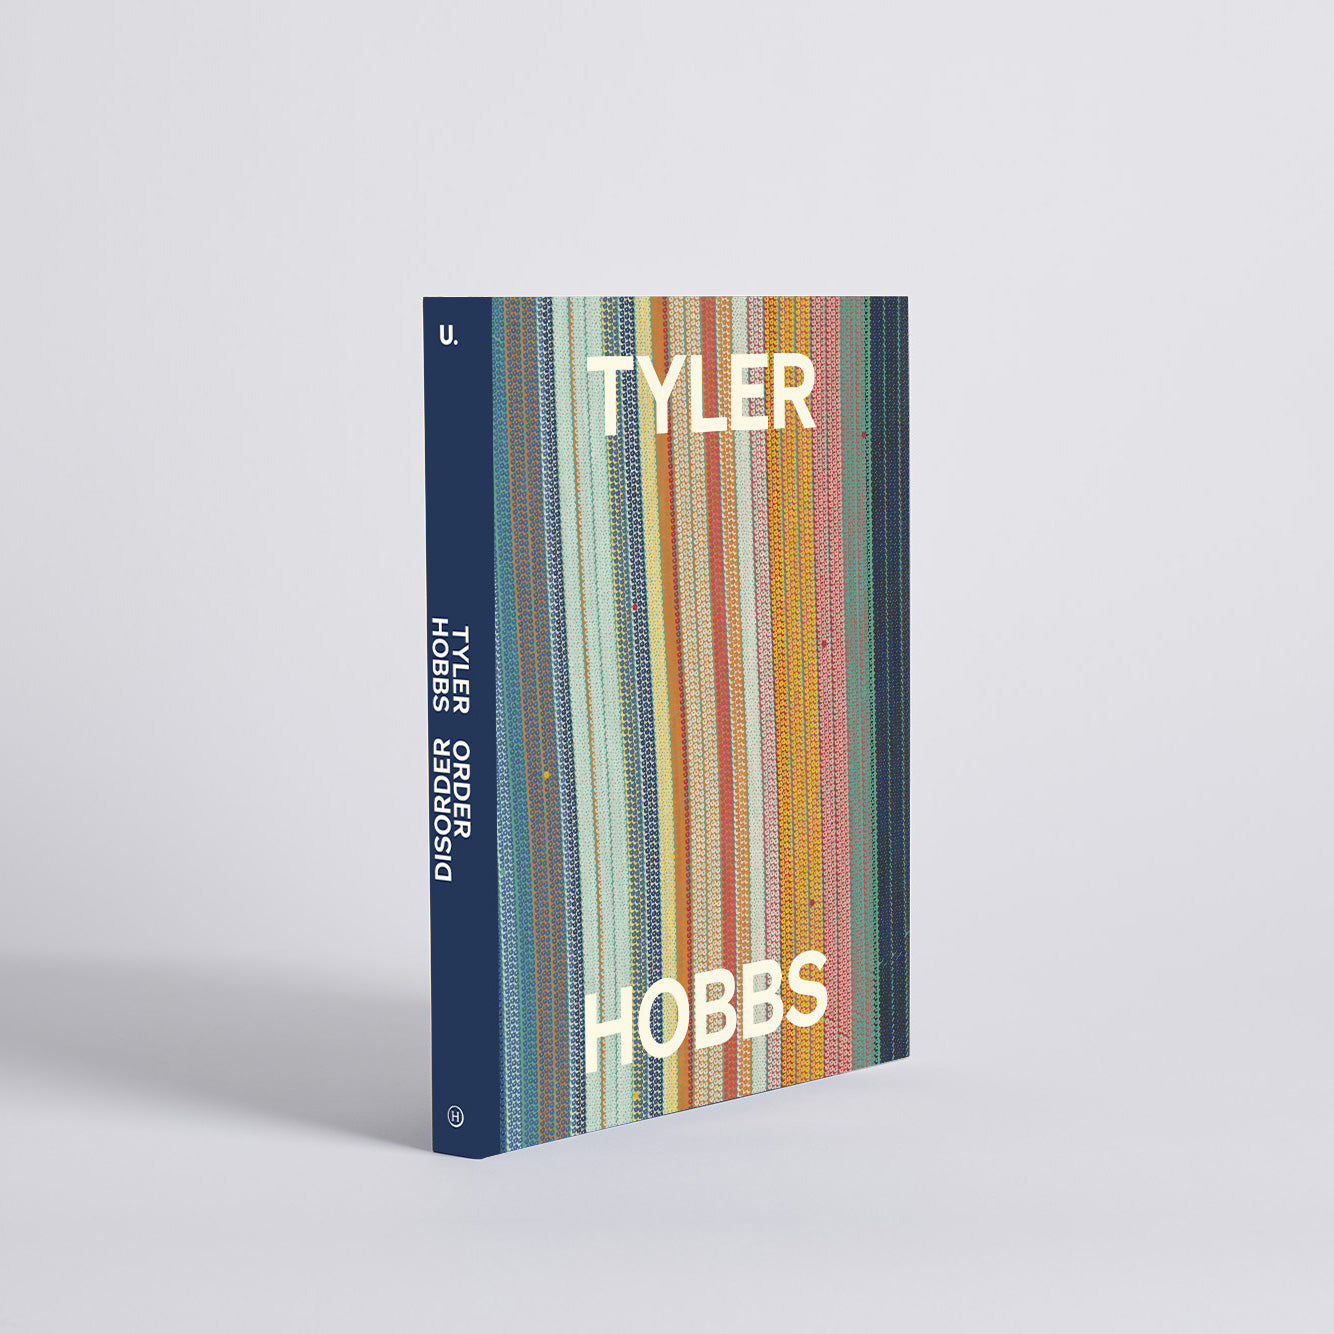 Order/Disorder (Trade Edition) - Tyler Hobbs